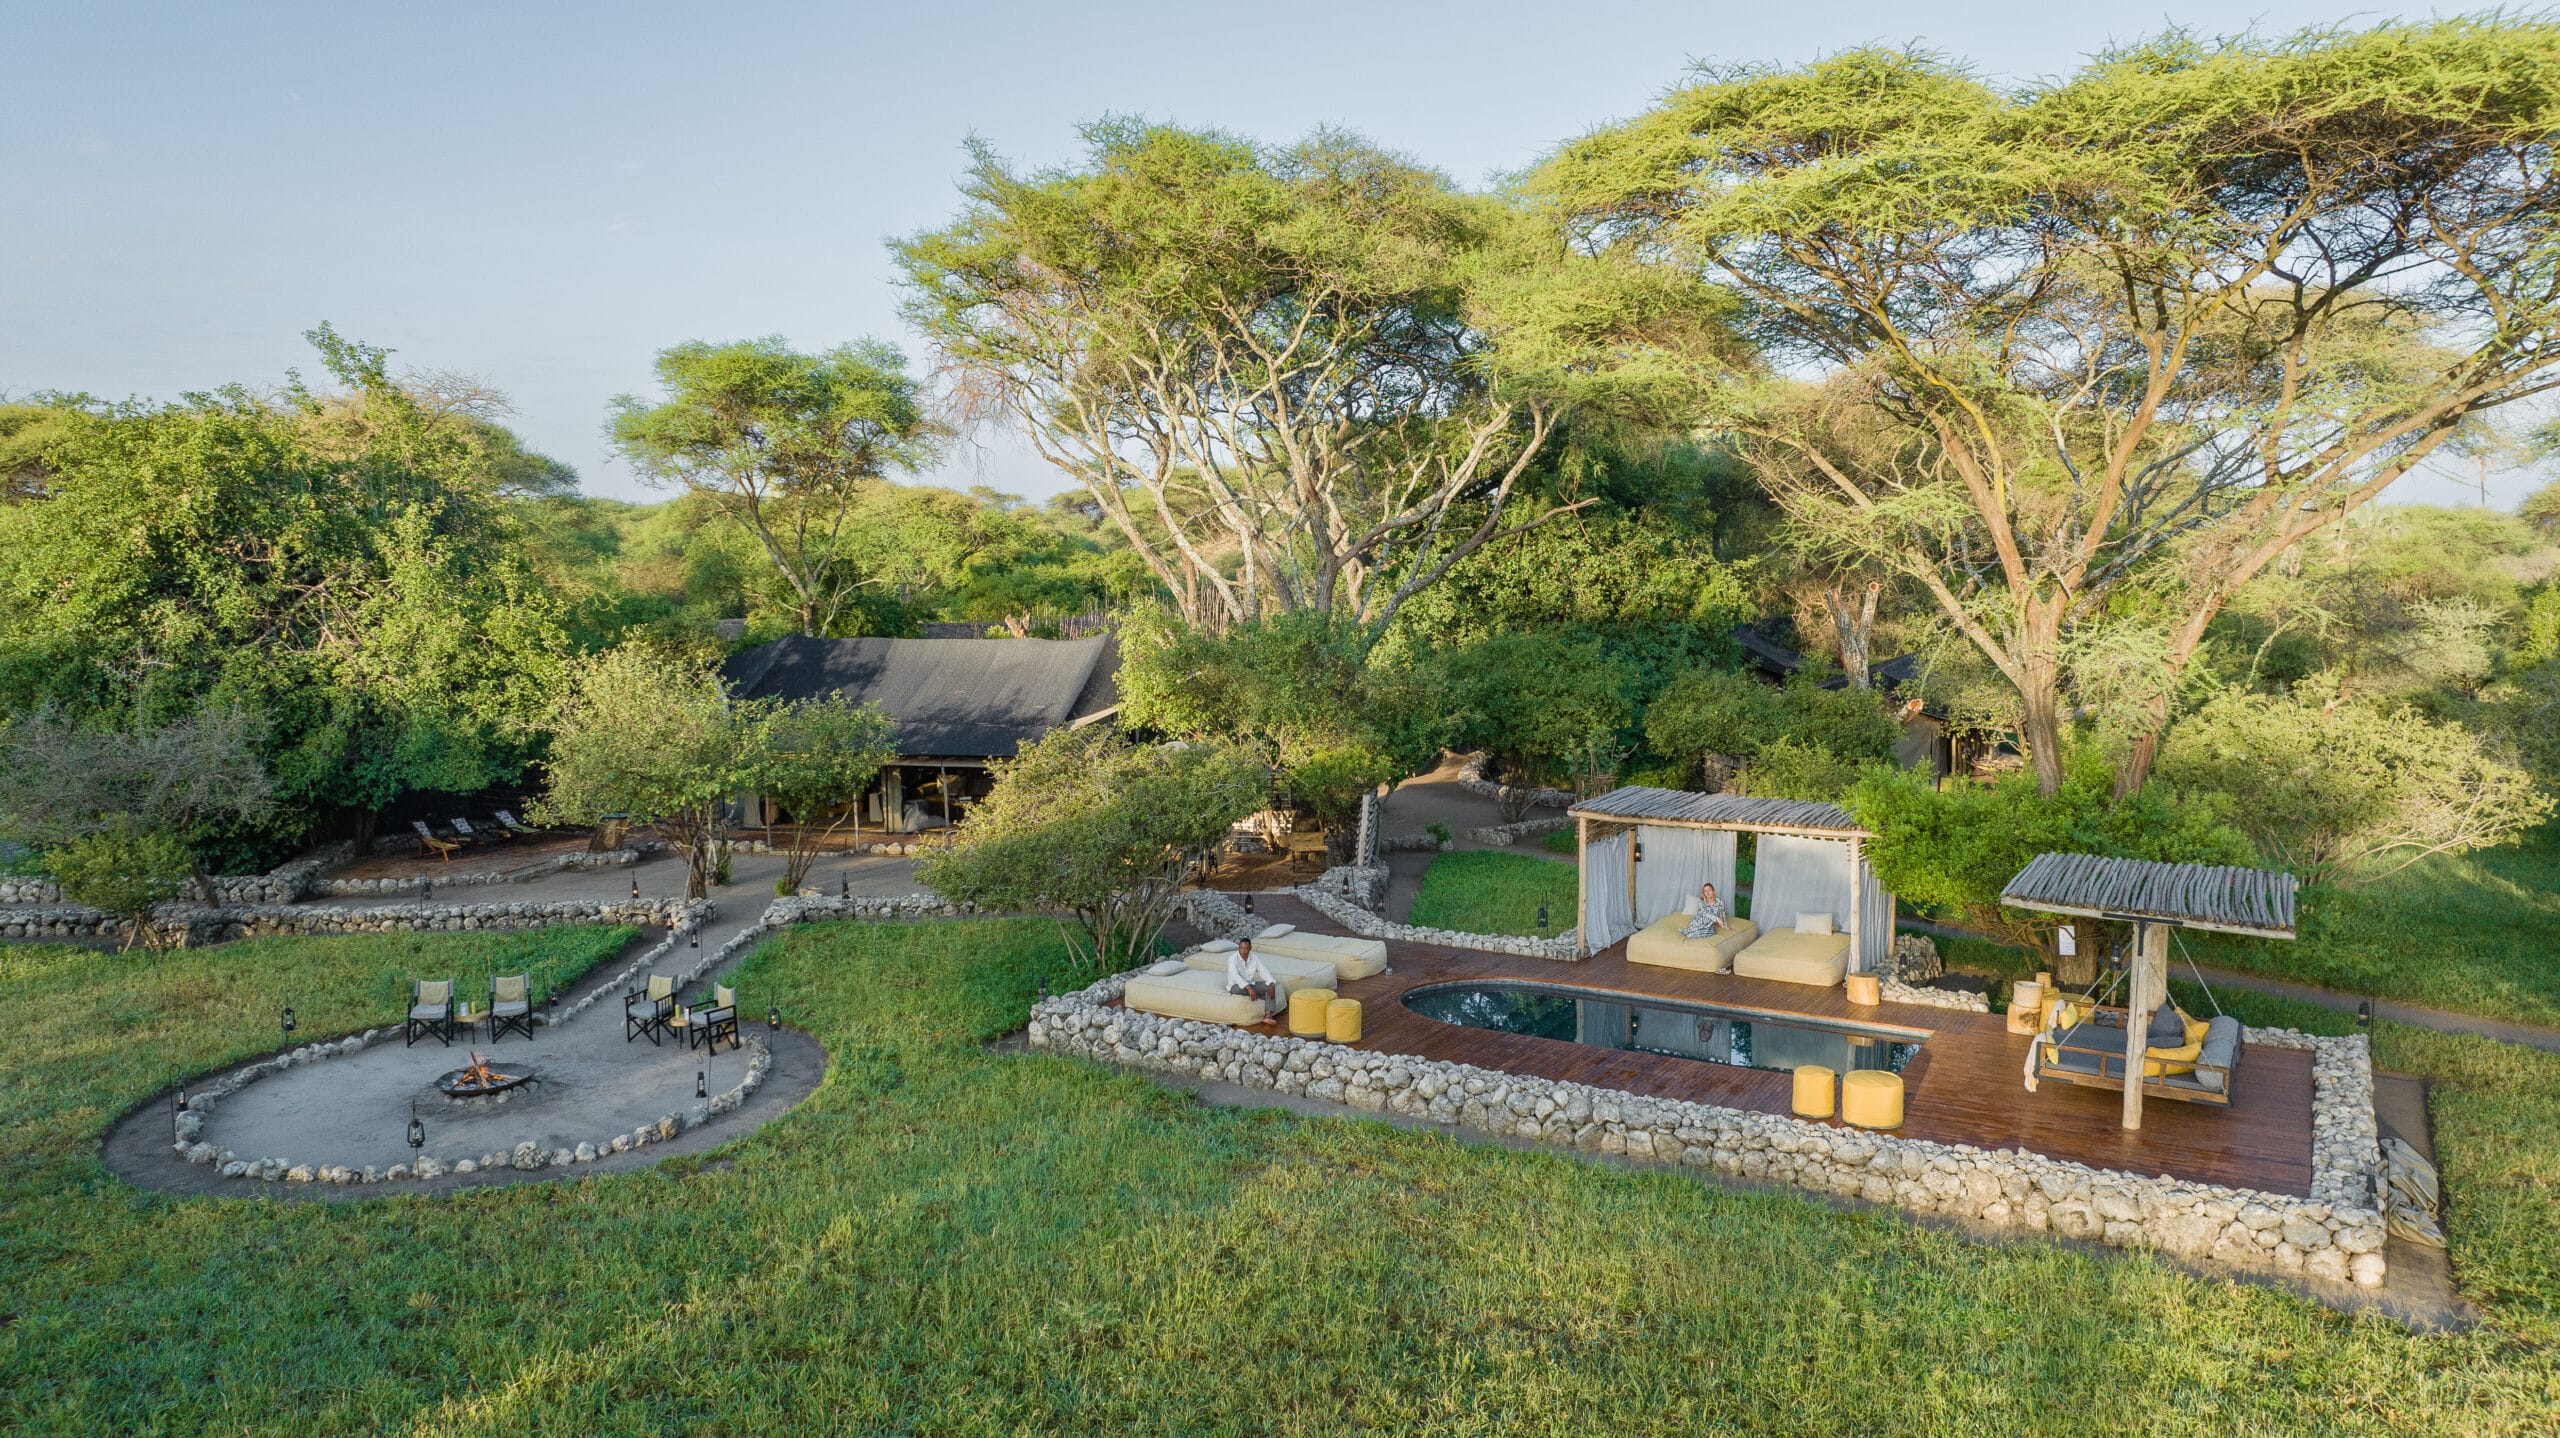 Factors to Consider When Choosing a Safari Lodge